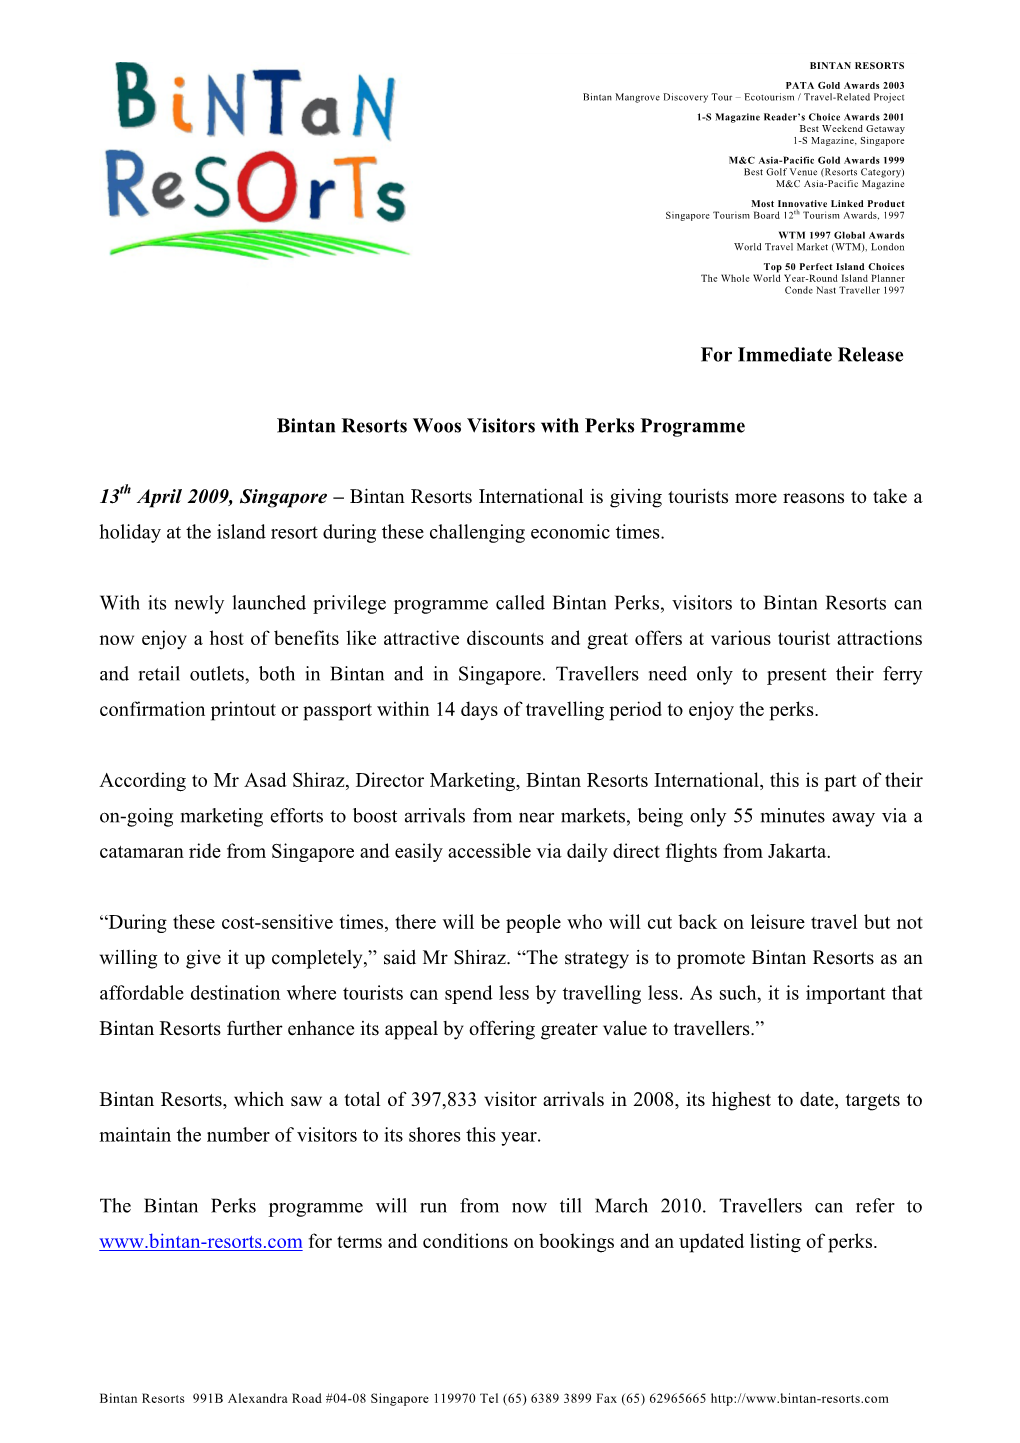 Bintan Resorts Woo Visitors with Perks Programme